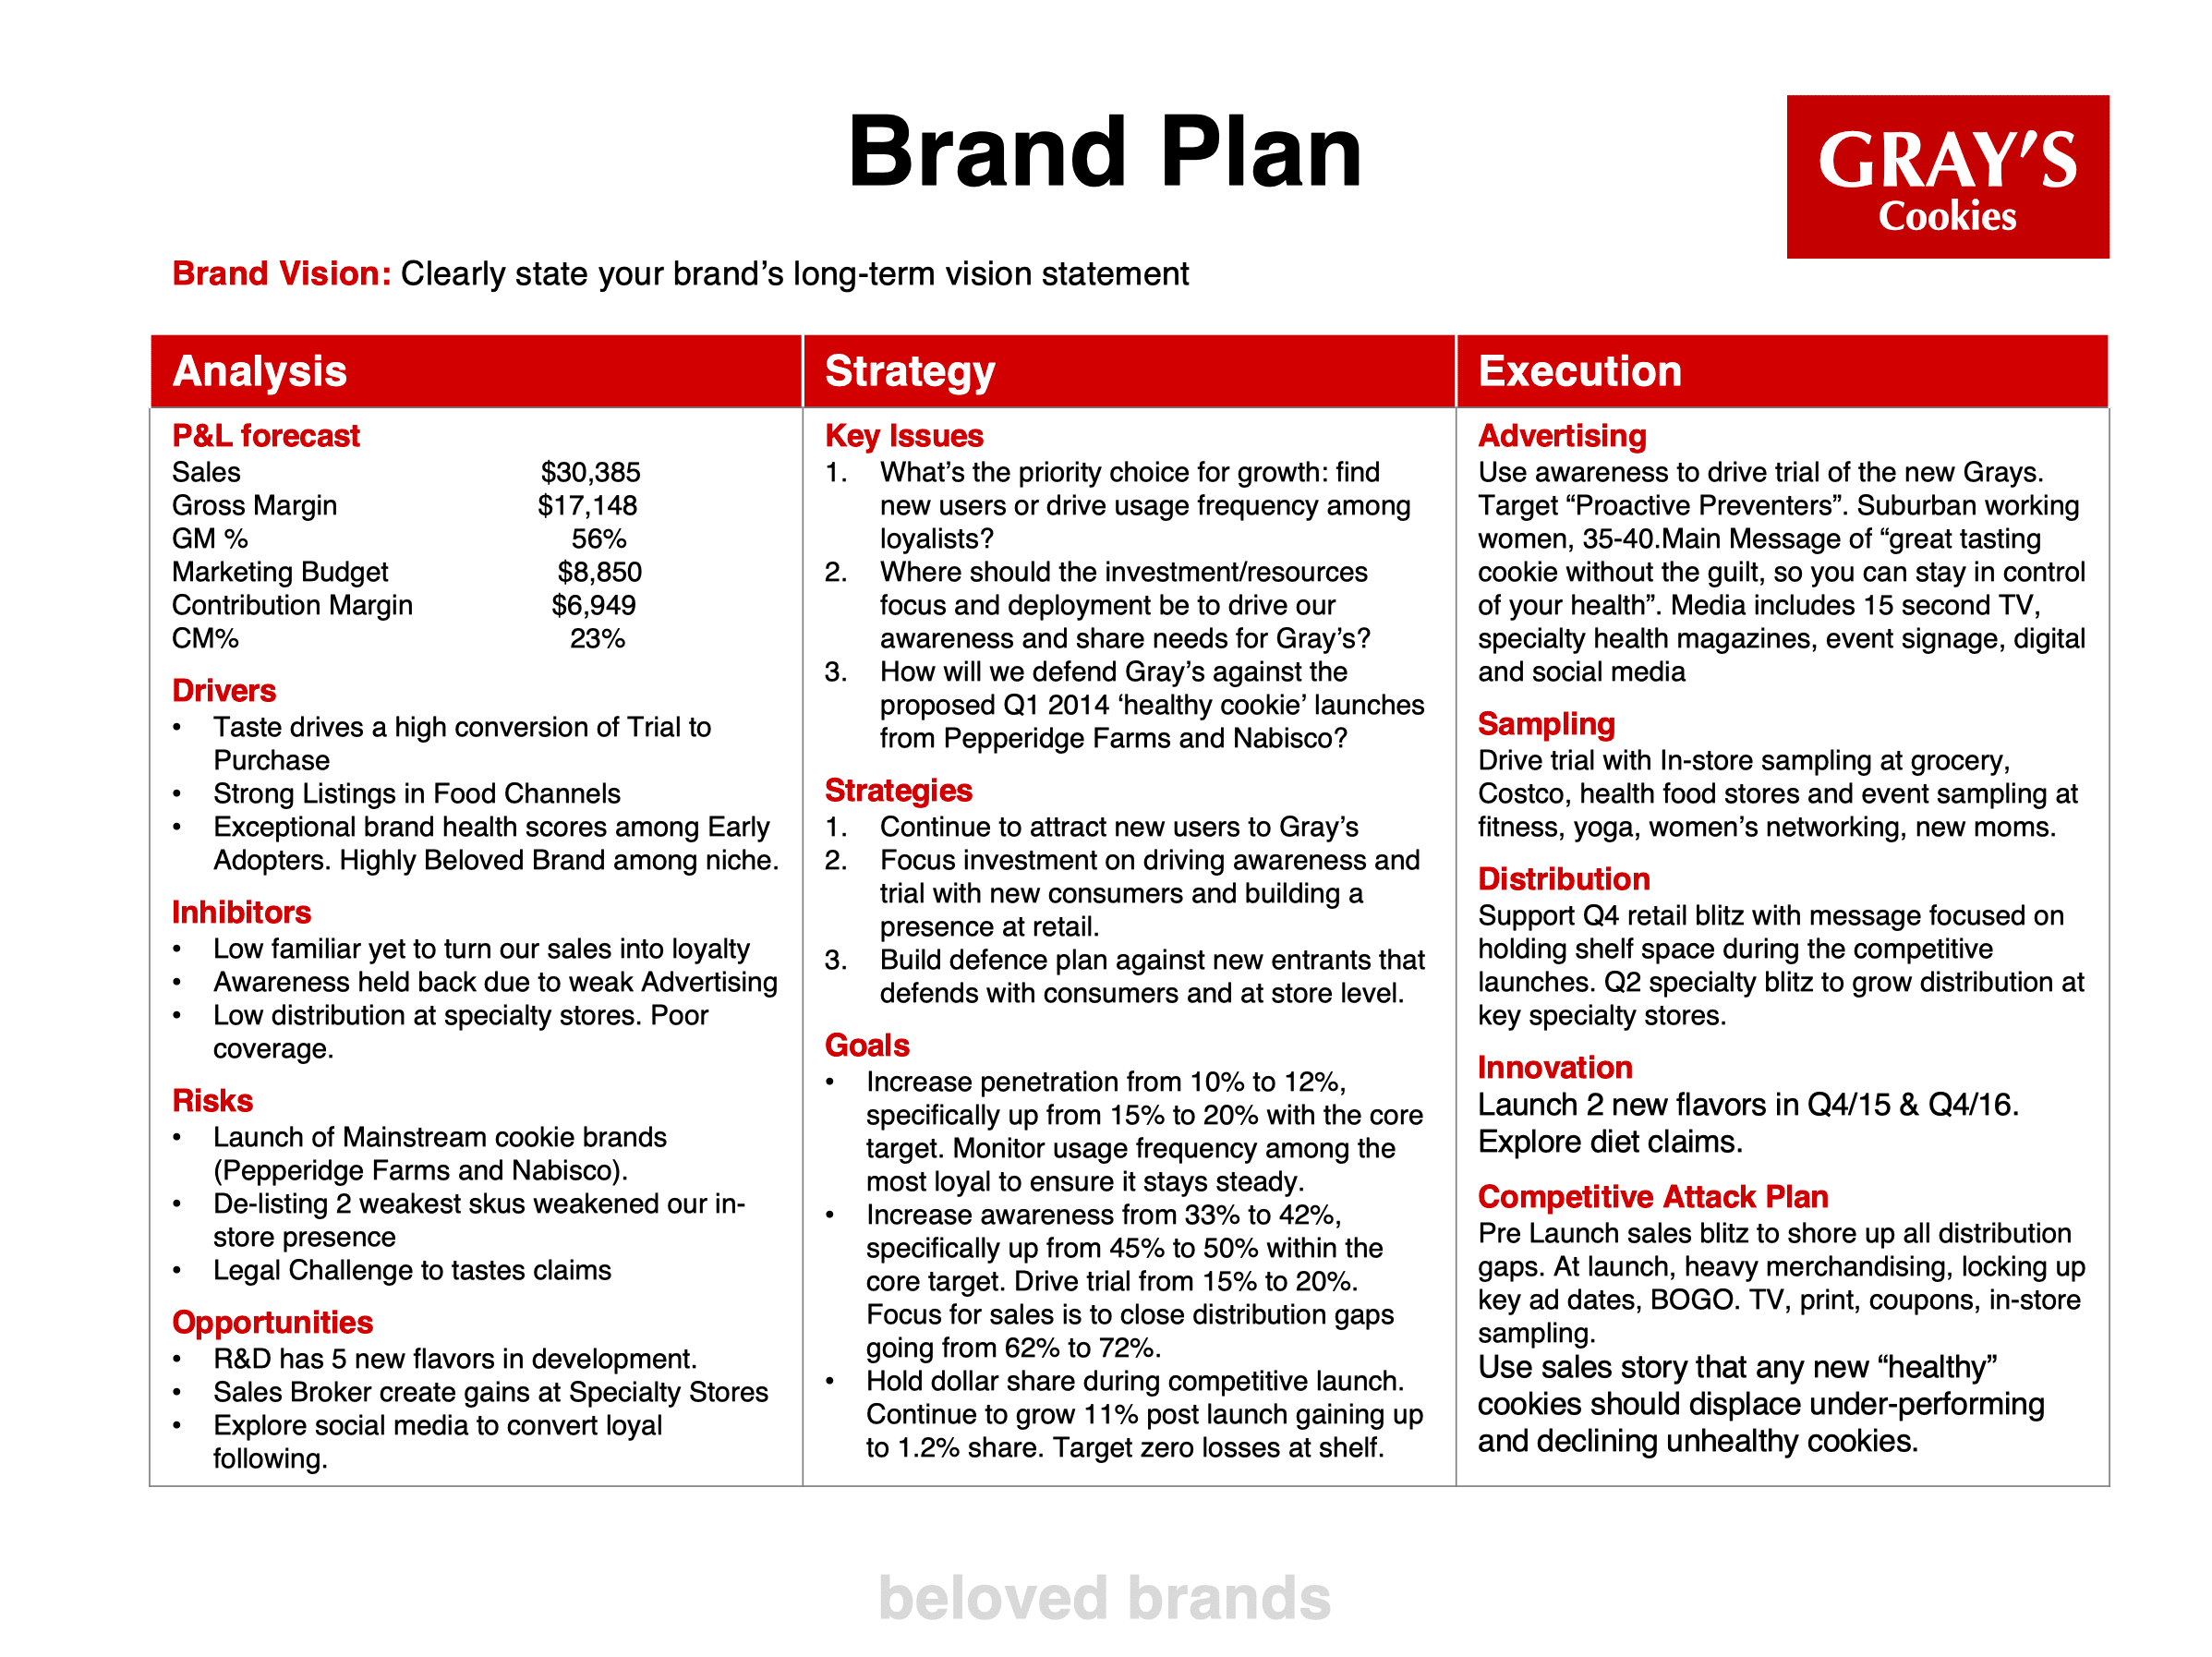 Brand Plan example